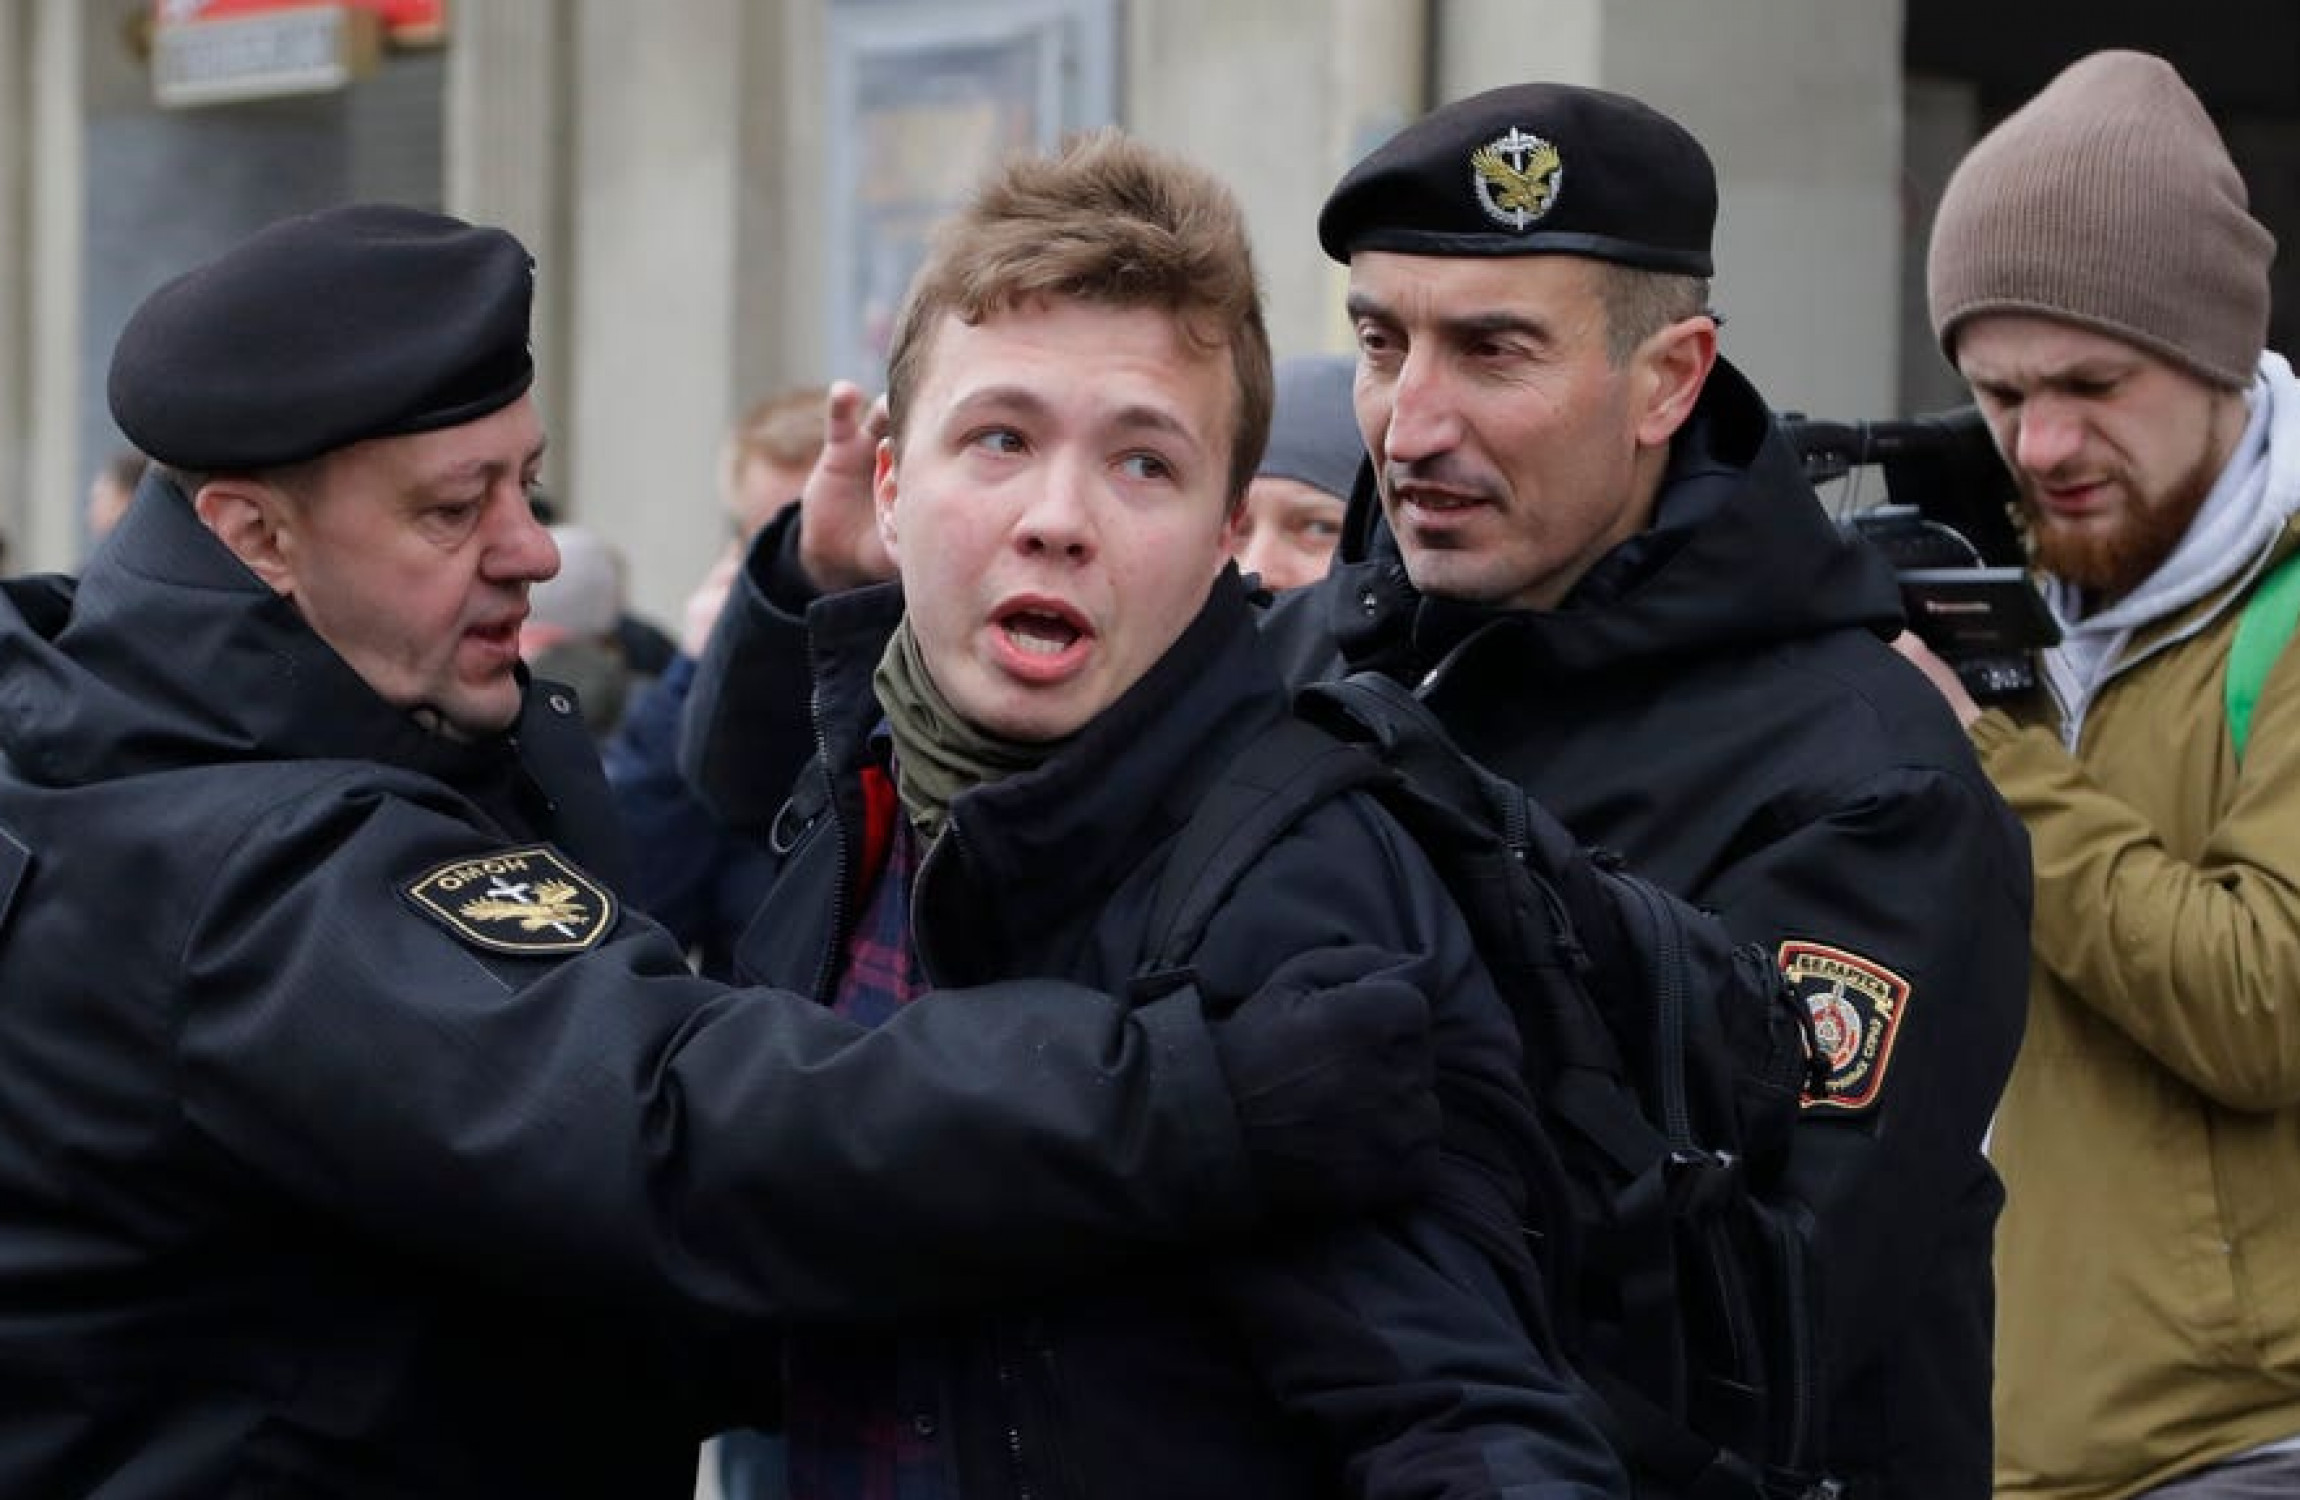 President’s opponent arrested after plane diverted to Belarus over bomb threat